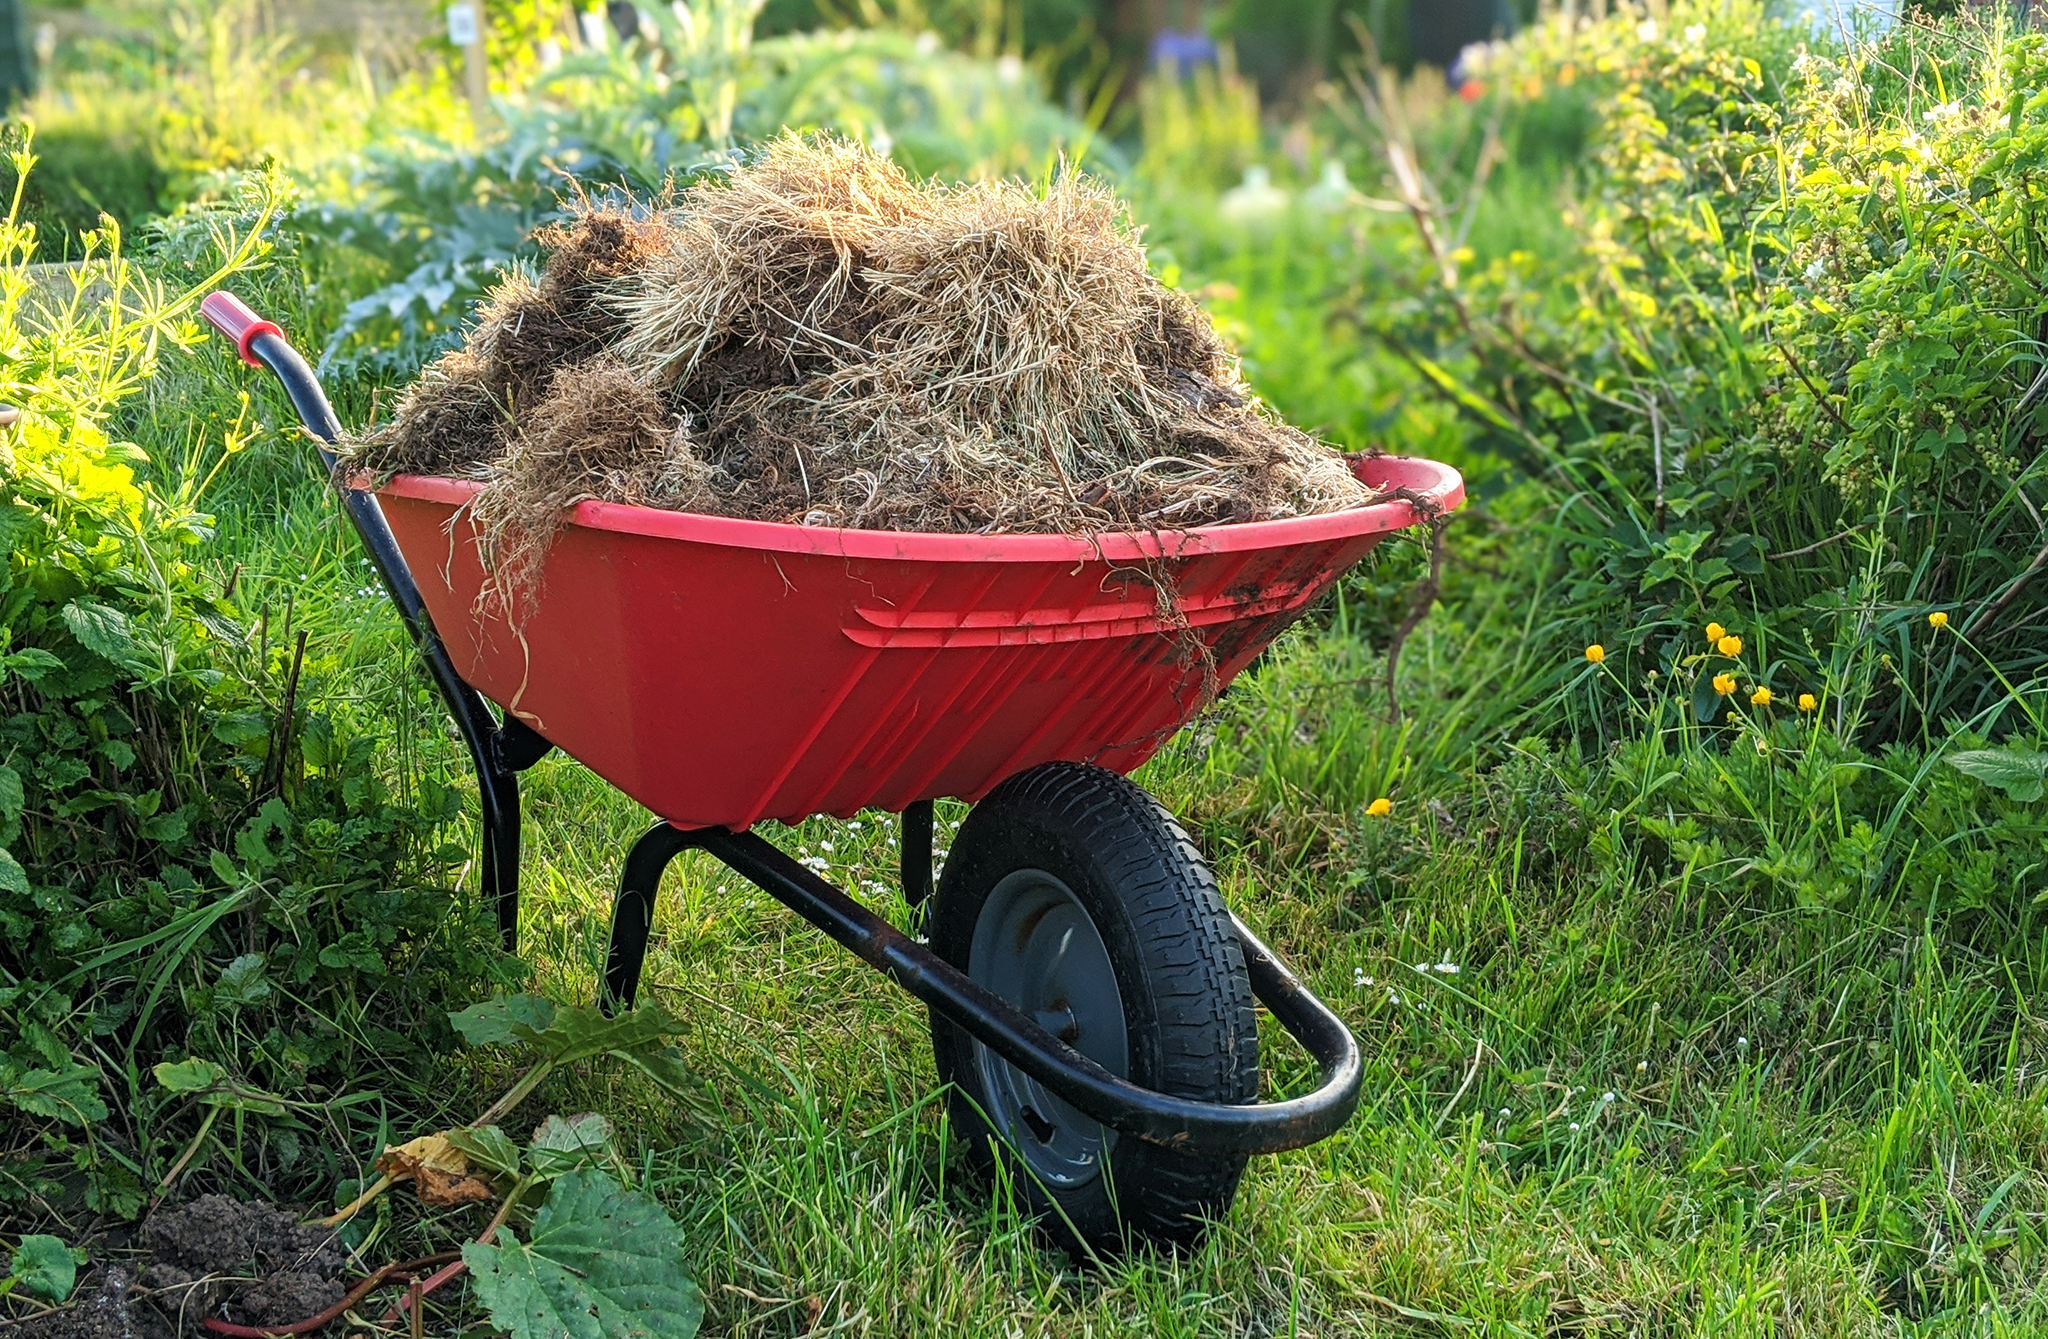 A red wheelbarrow on a lawn, the wheelbarrow is full of garden waste and grass cuttings